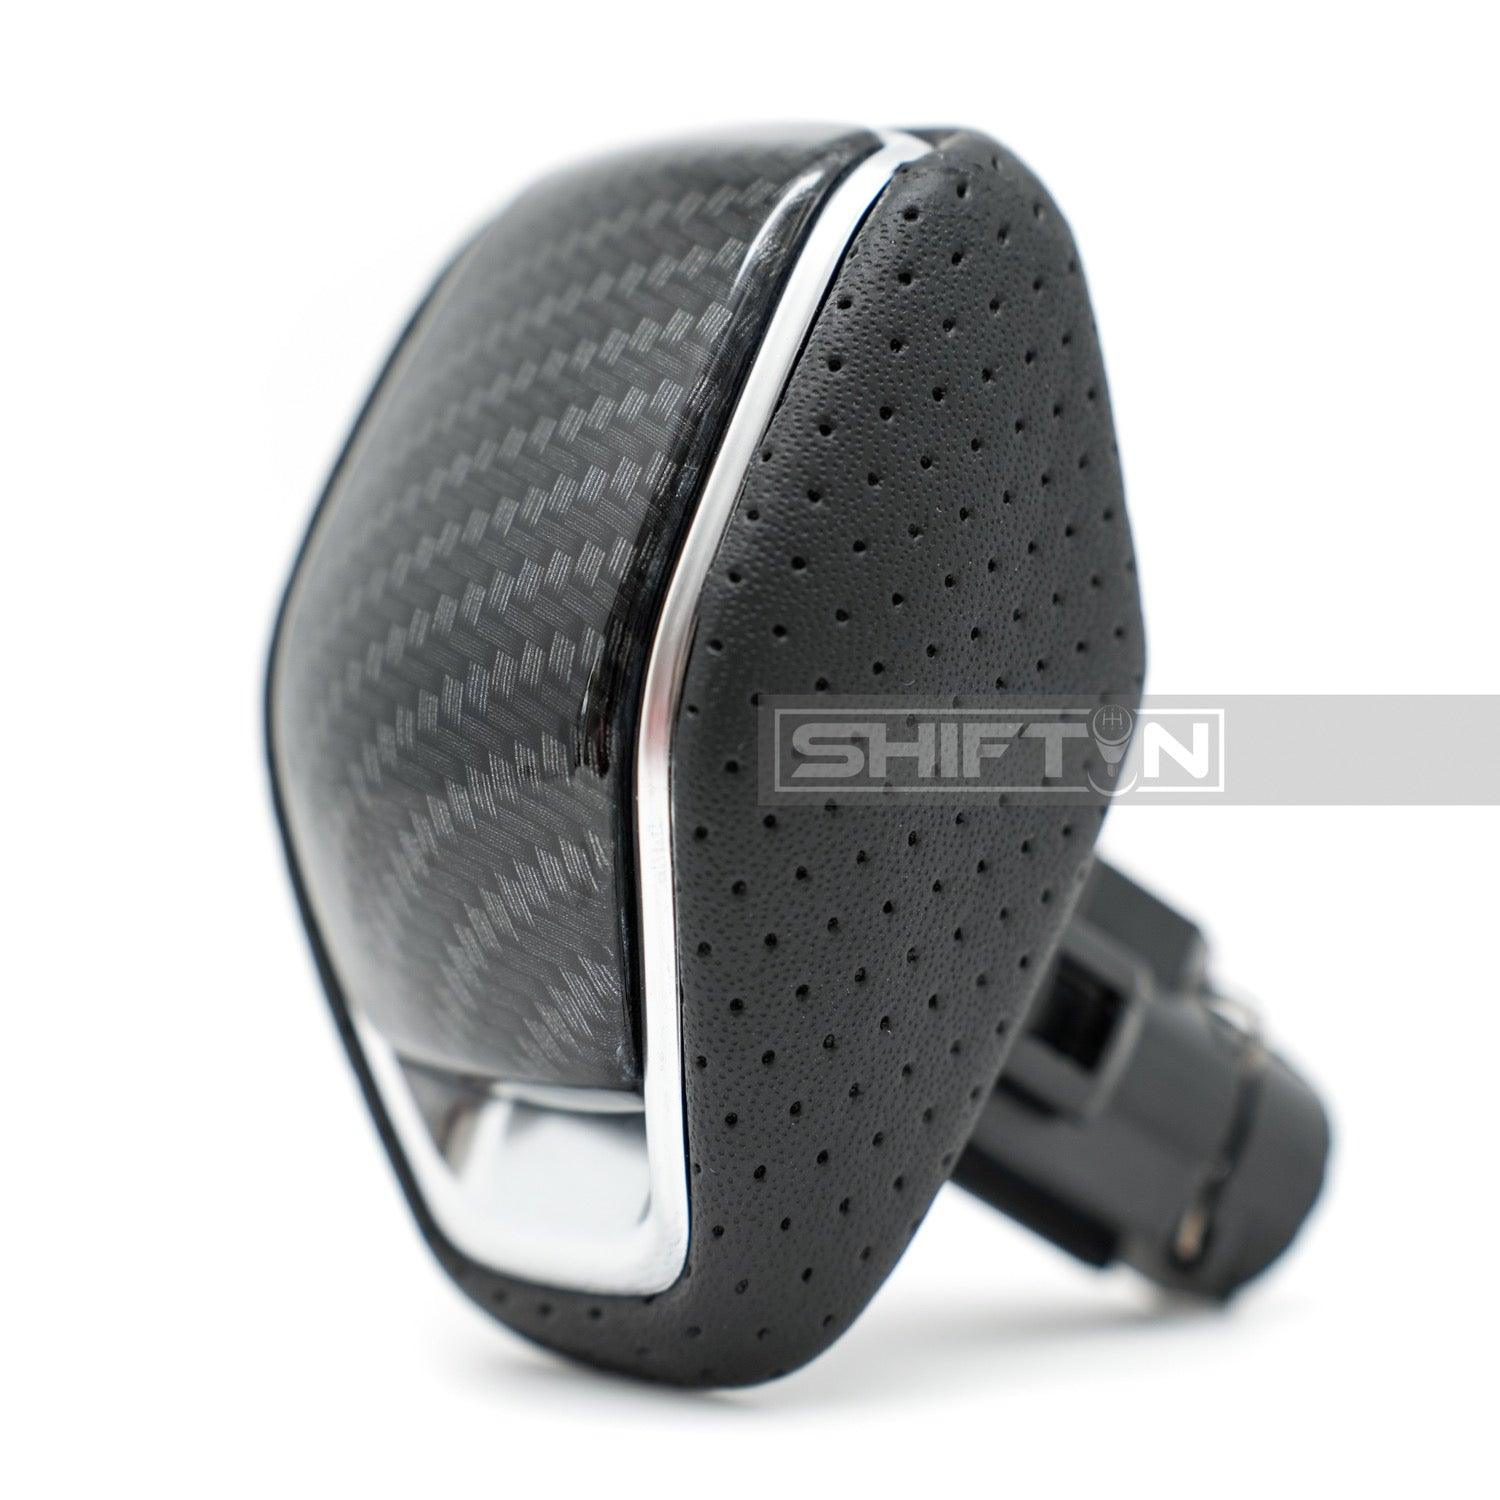 SHIFTIN Carbon Fiber Gear Shift Knob Stick Shifter Lever for